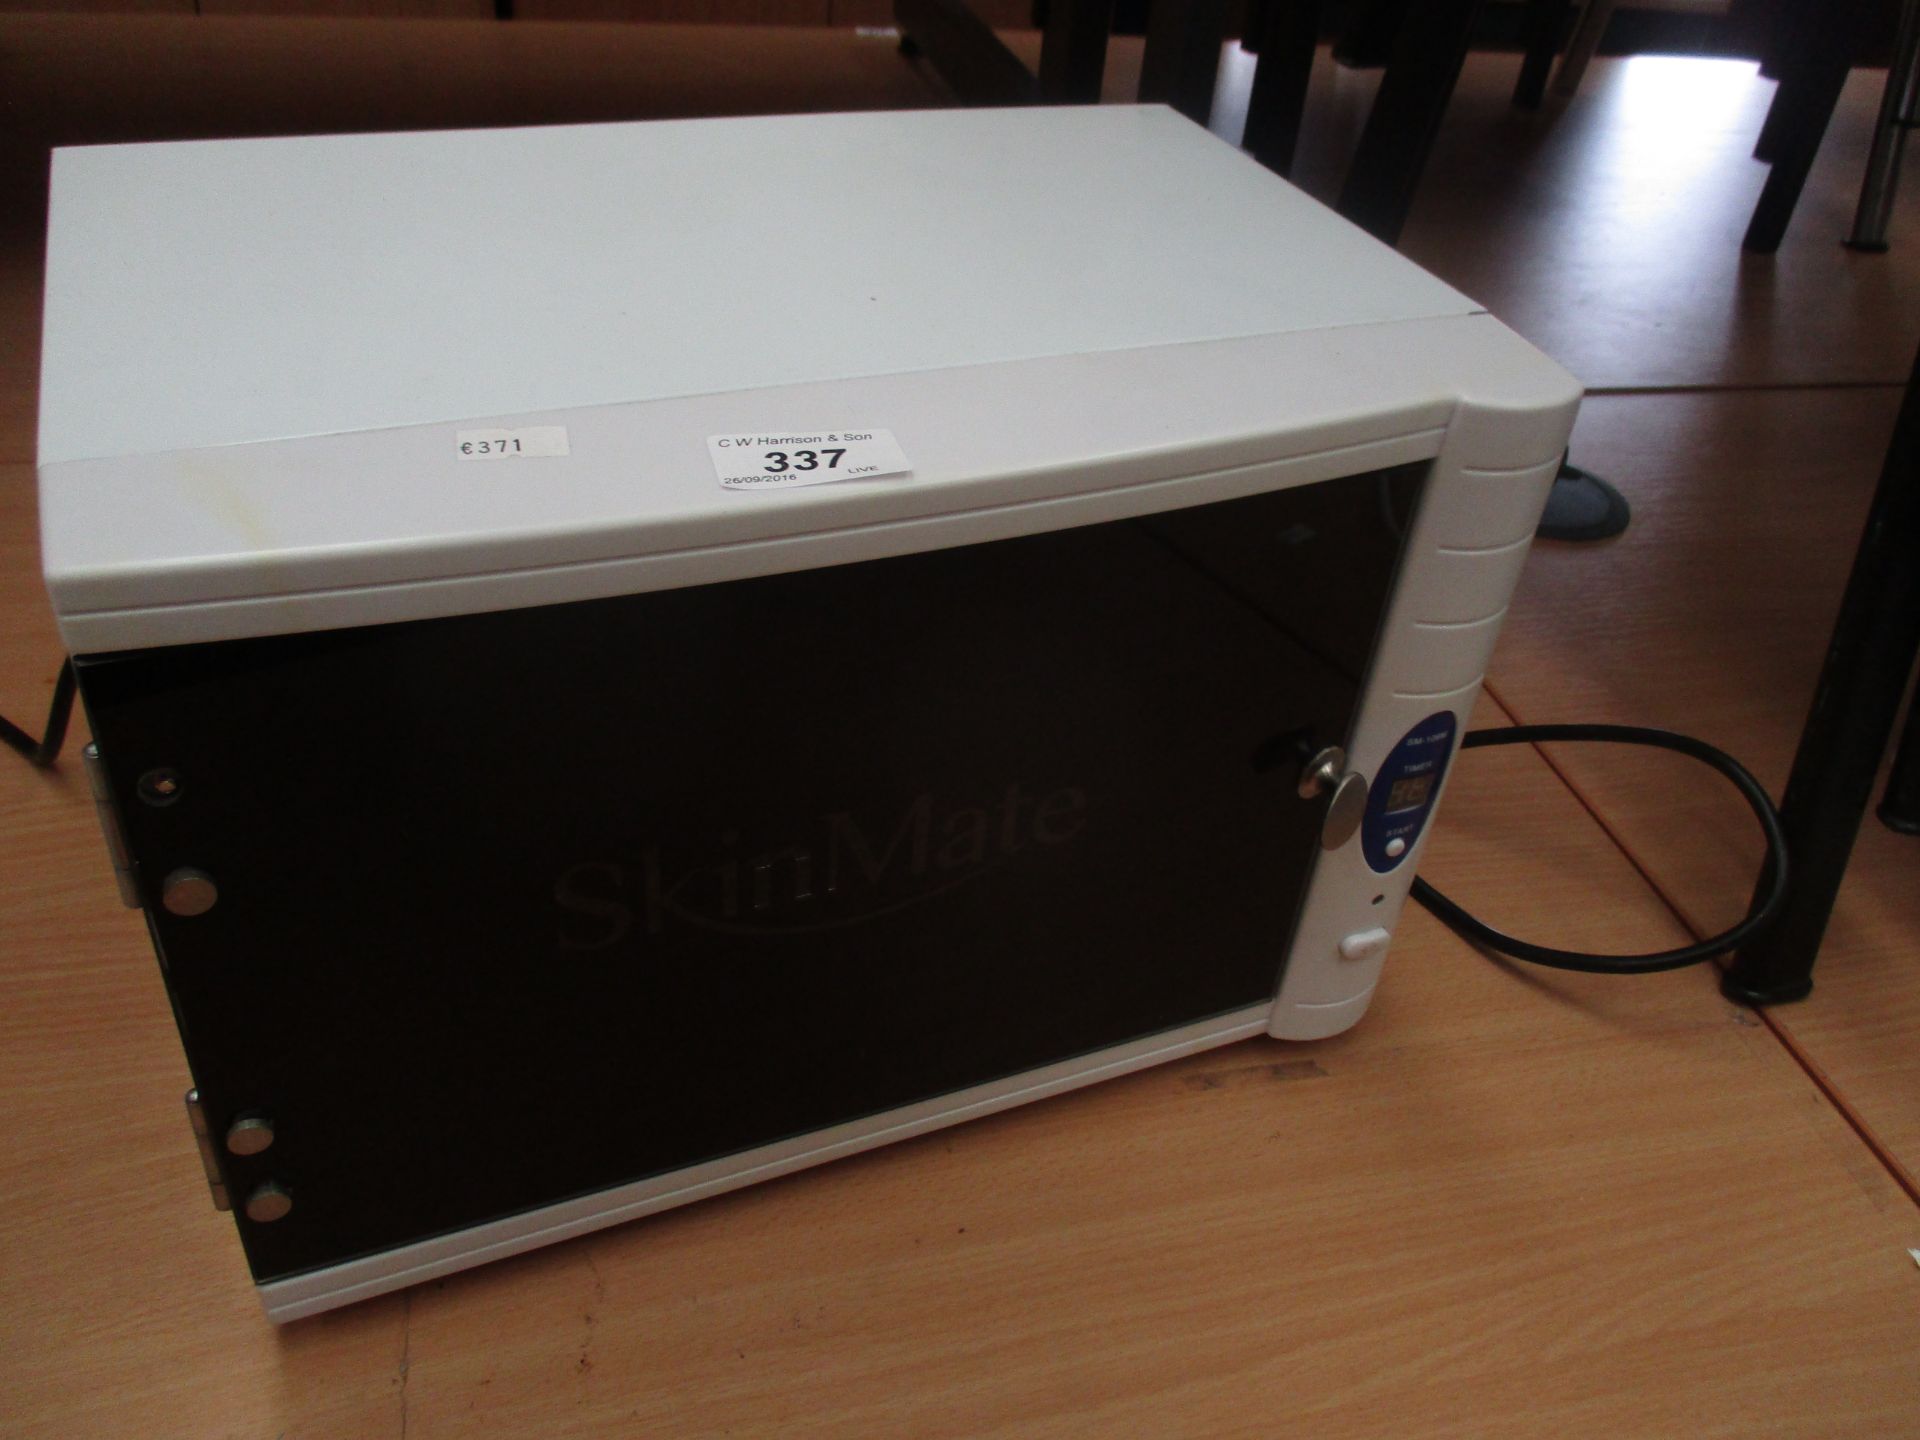 A Skinmate SM-109M sterilising unit - 240v